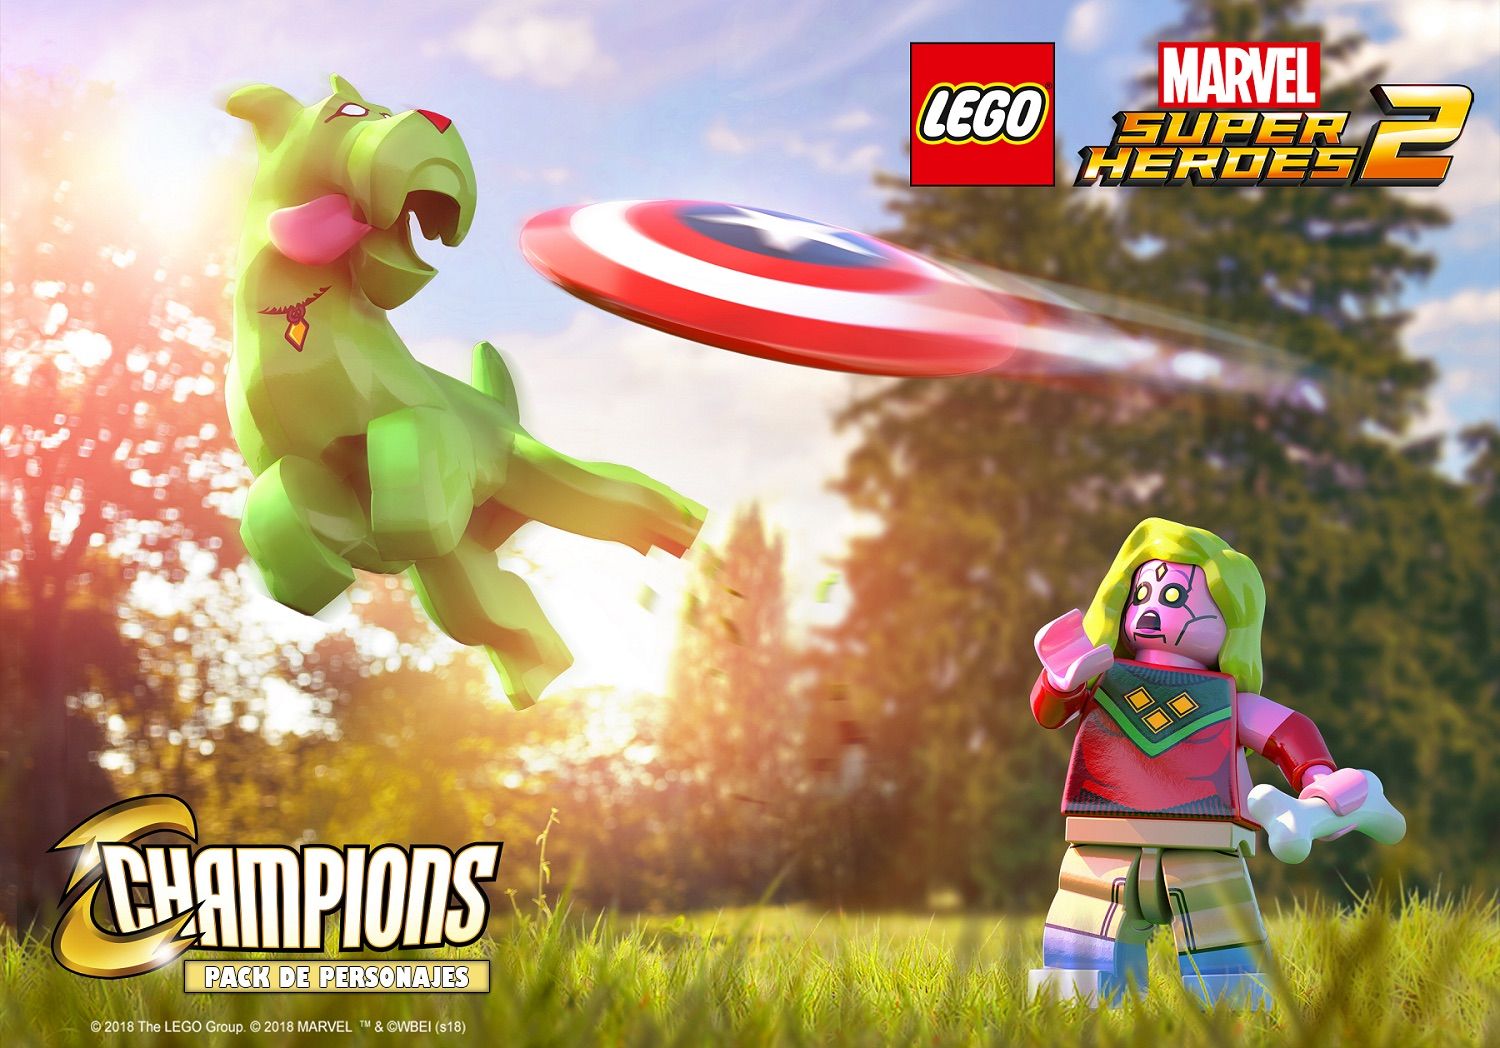 el pack "Champions" para 'LEGO Marvel Super Heroes 2' - AllGamersIn